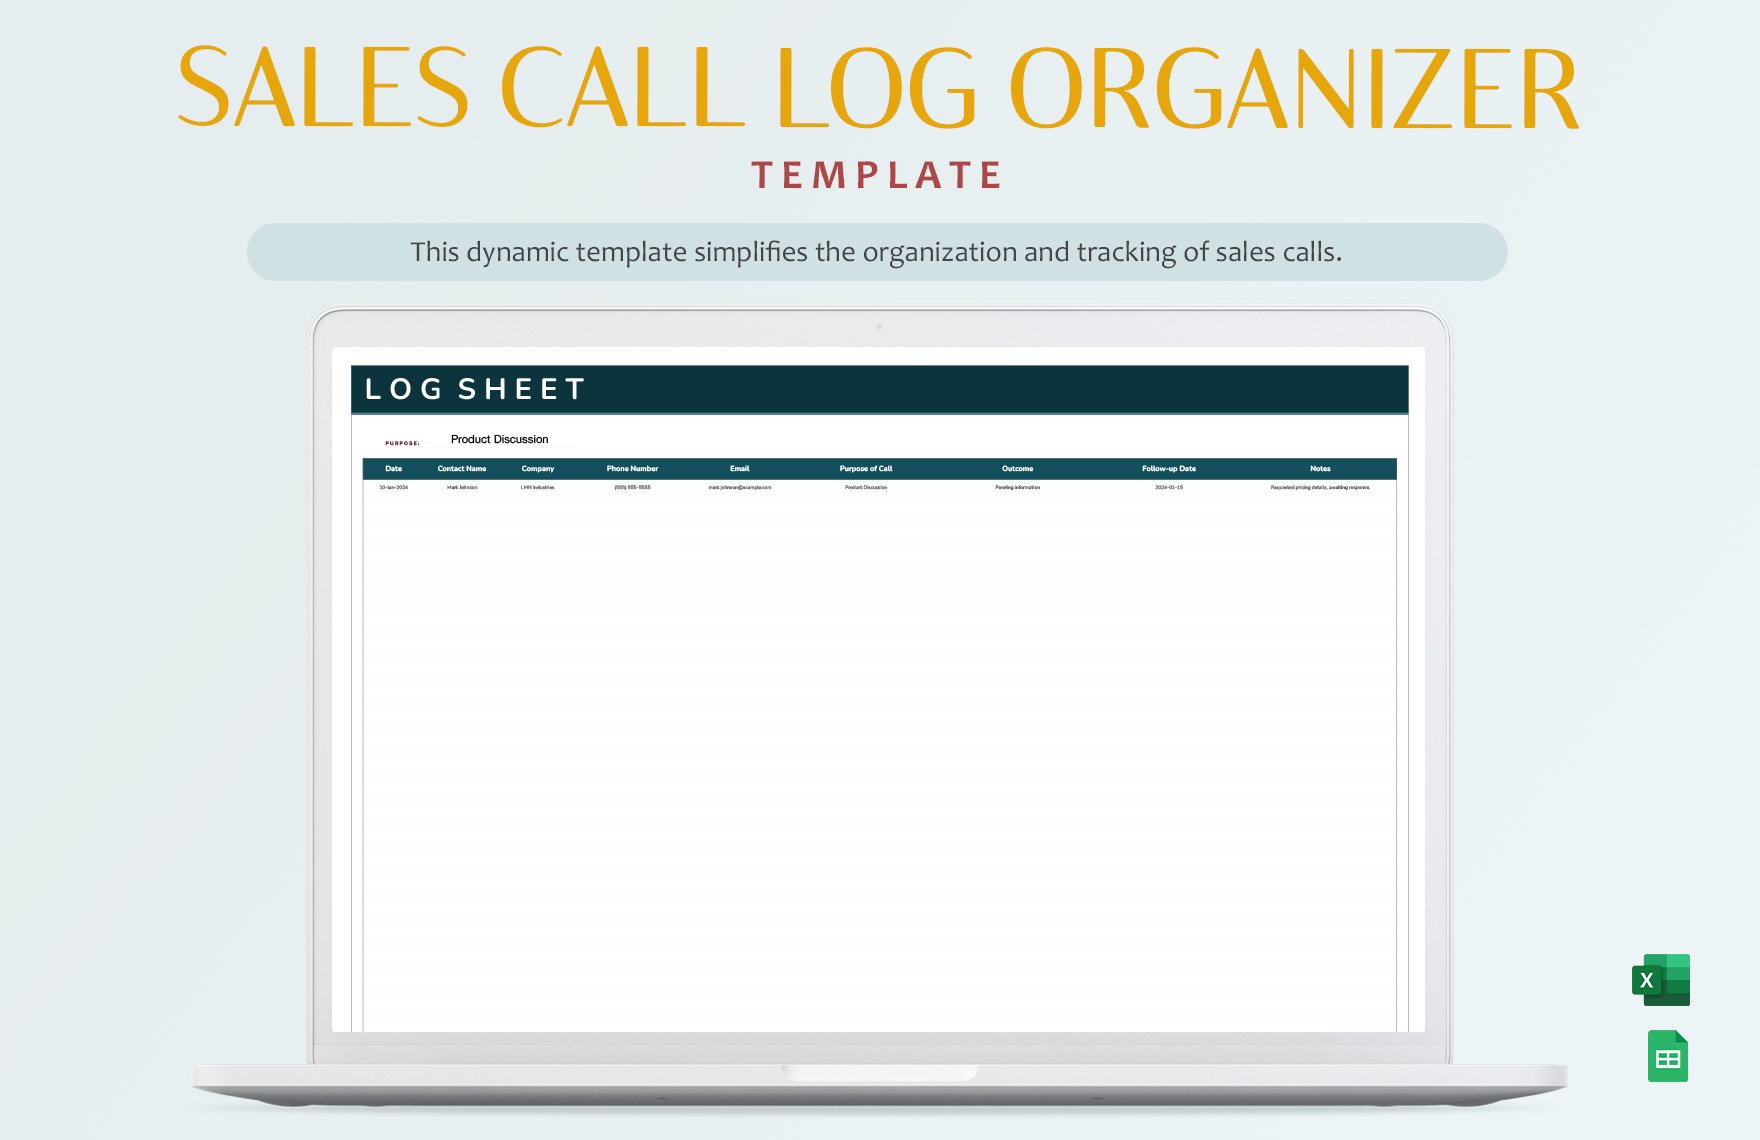 Sales Call Log Organizer Template